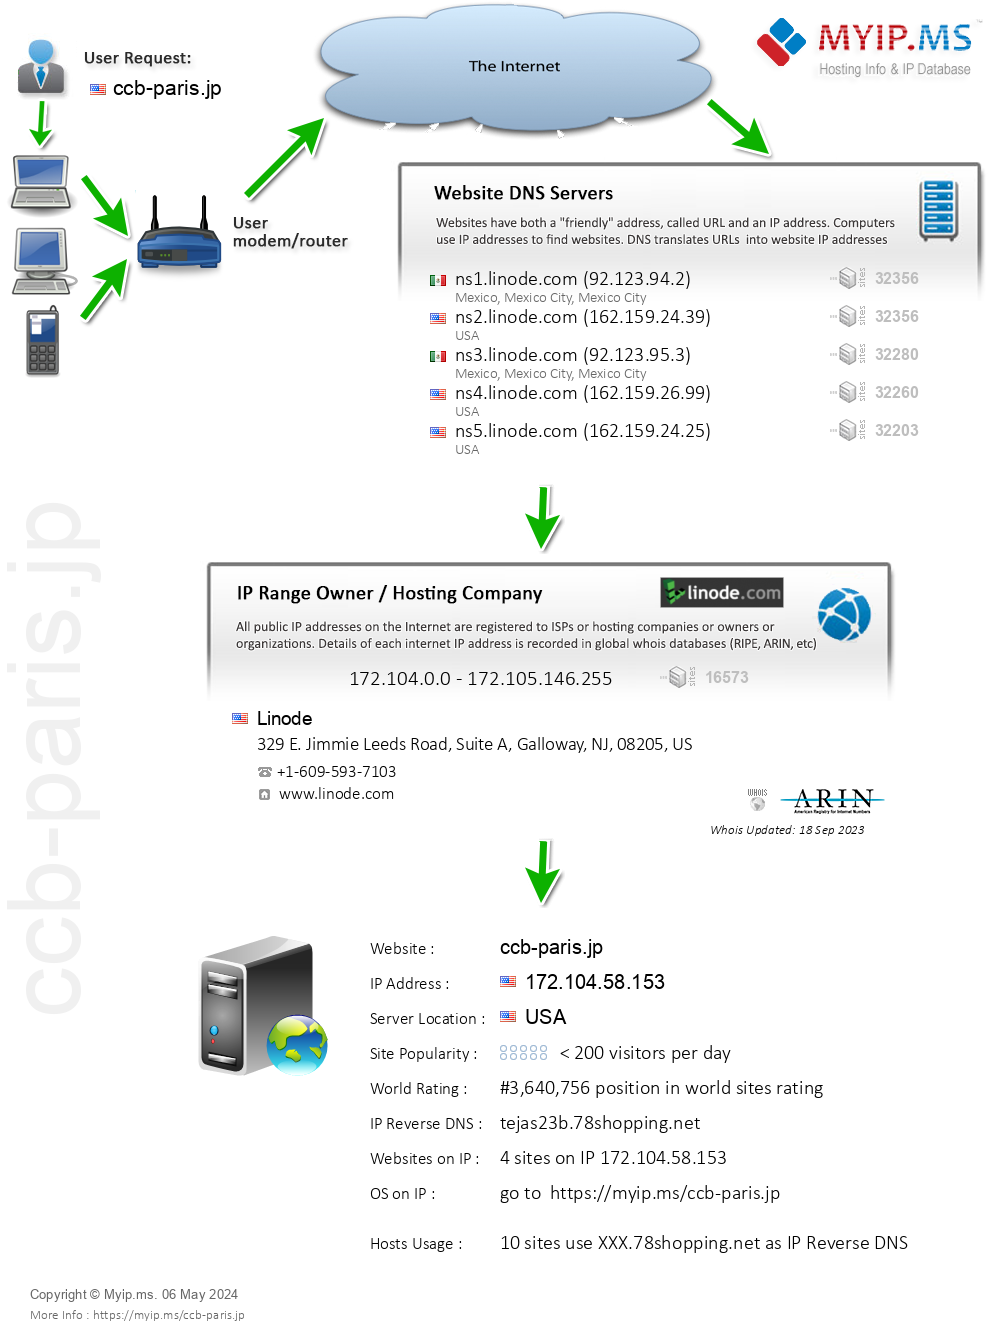 Ccb-paris.jp - Website Hosting Visual IP Diagram